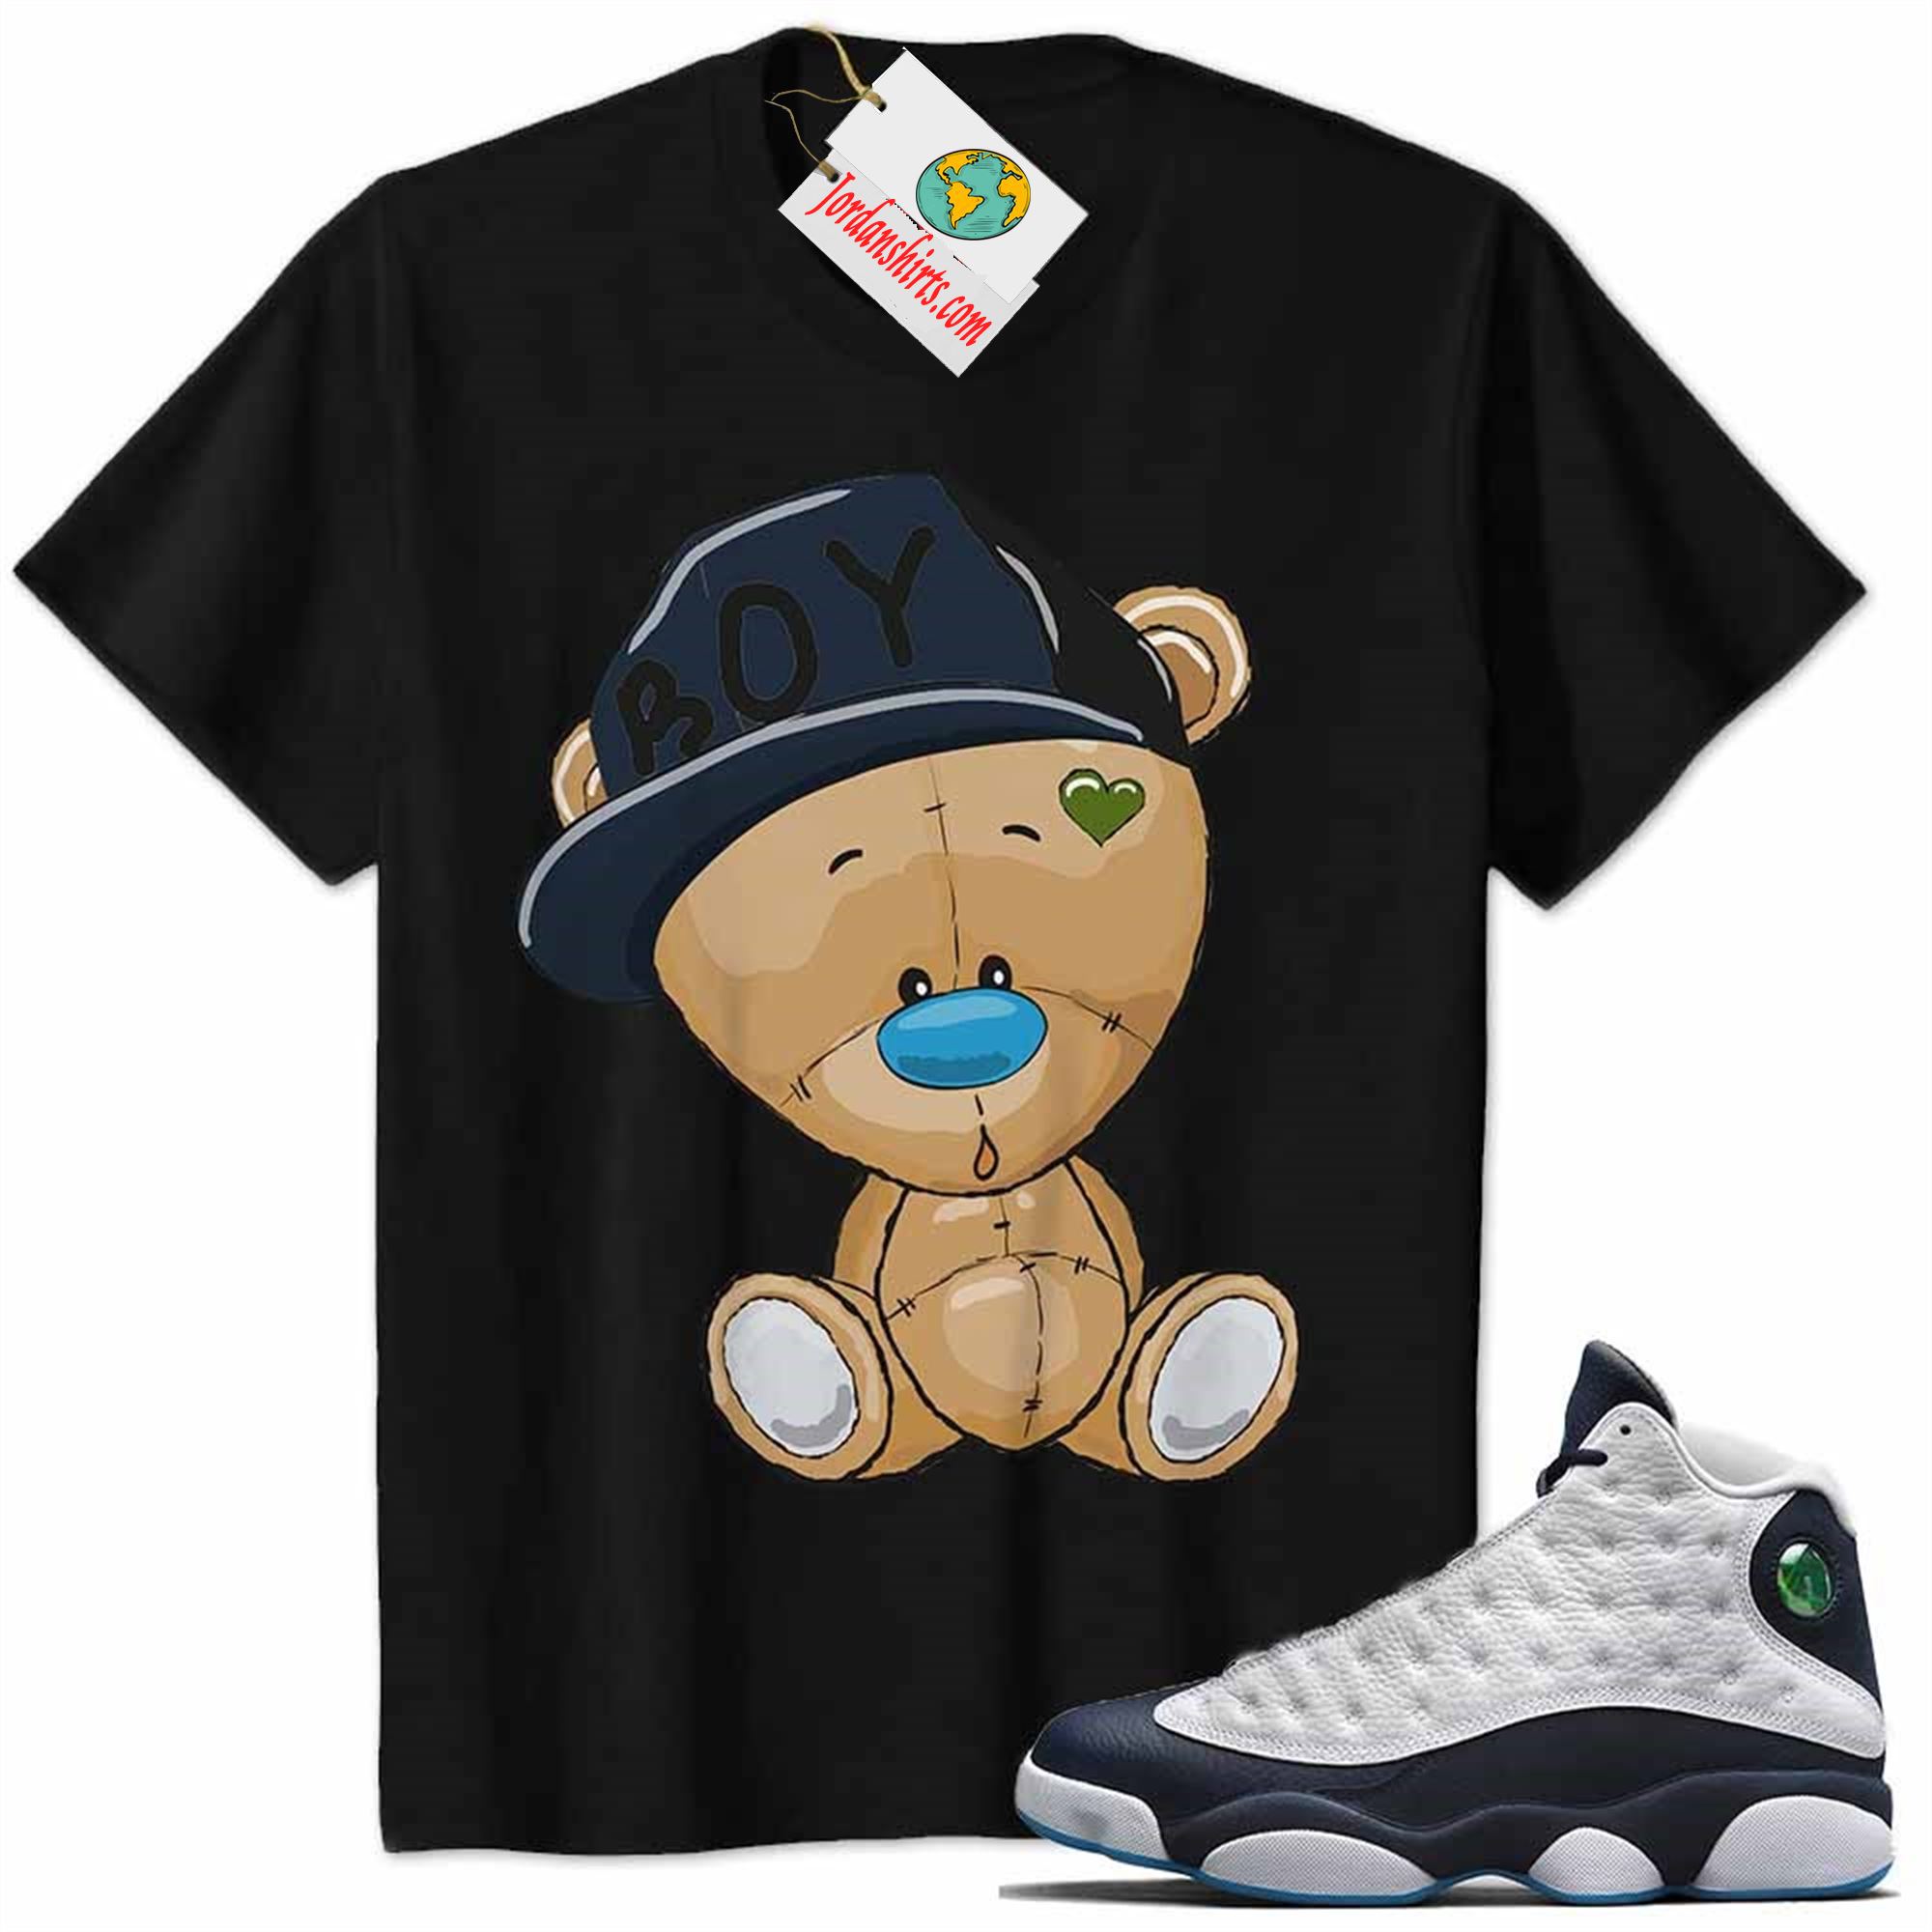 Jordan 13 Shirt, Jordan 13 Obsidian Shirt Cute Baby Teddy Bear Black Plus Size Up To 5xl